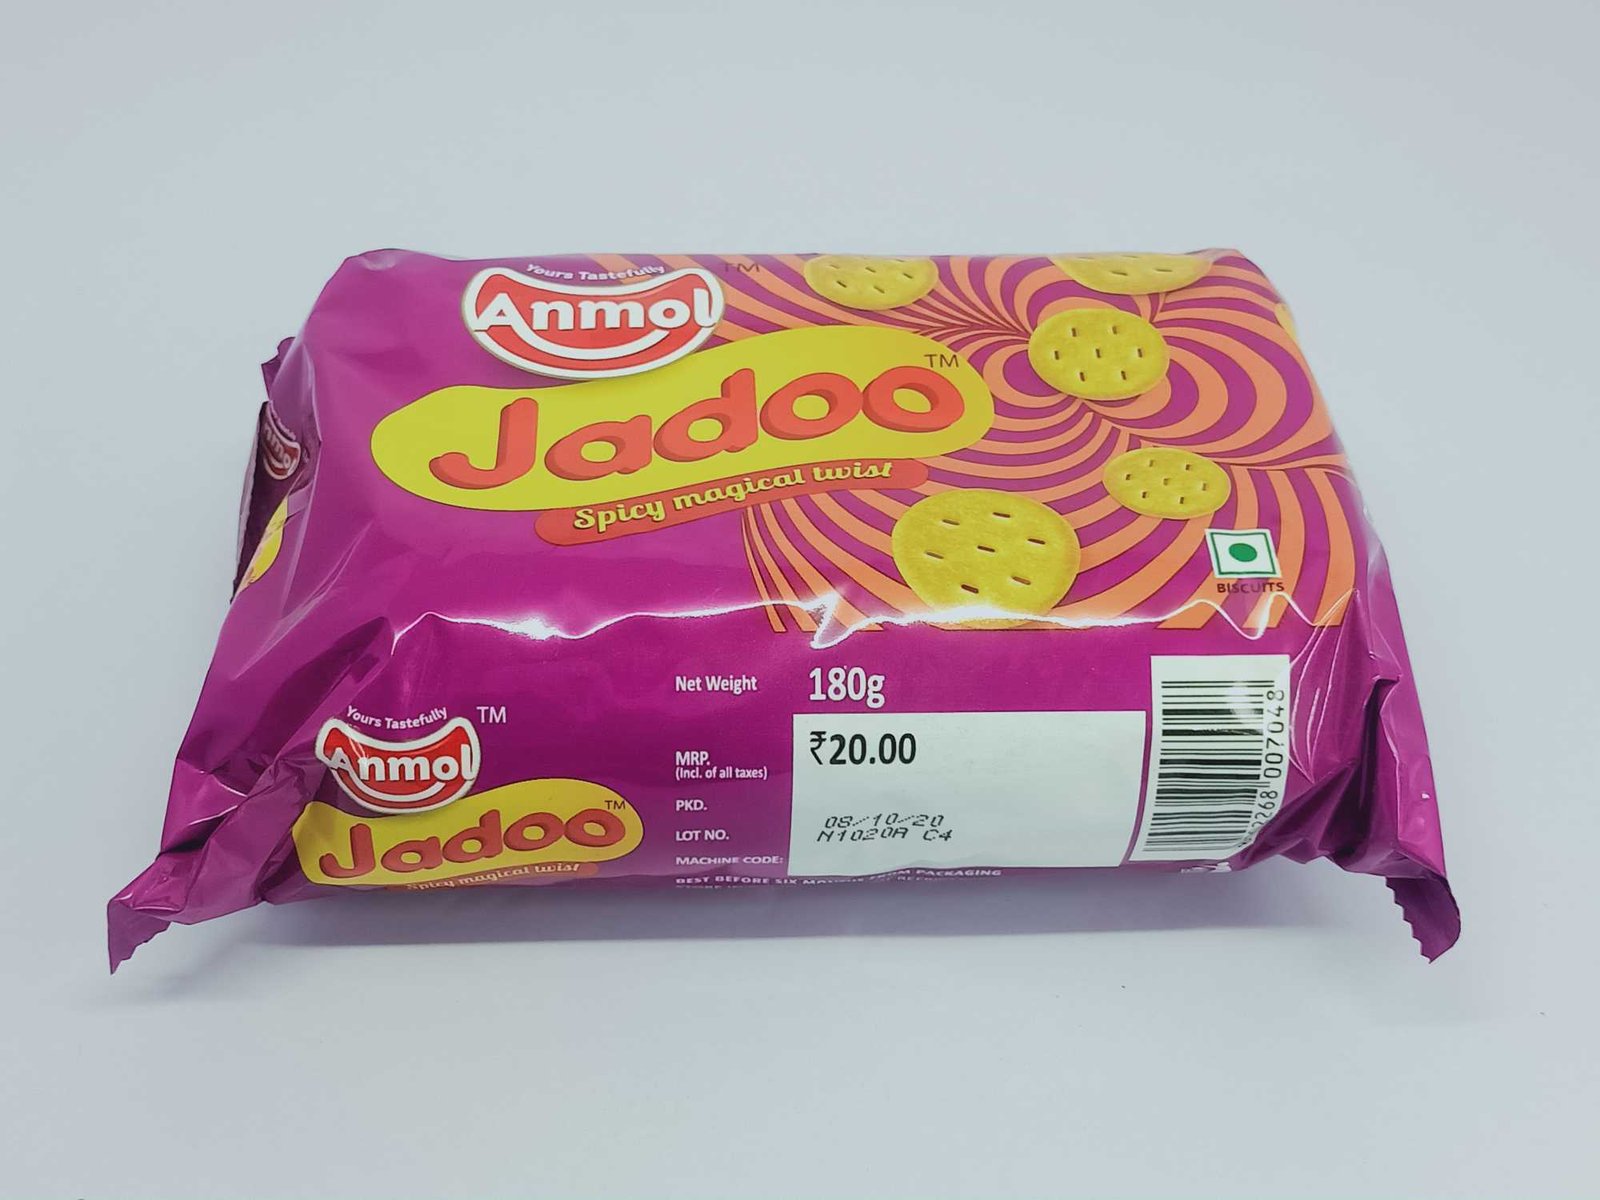 Anmol Jadoo Spicy Magical Twist yours Tasterfully, 180 gram